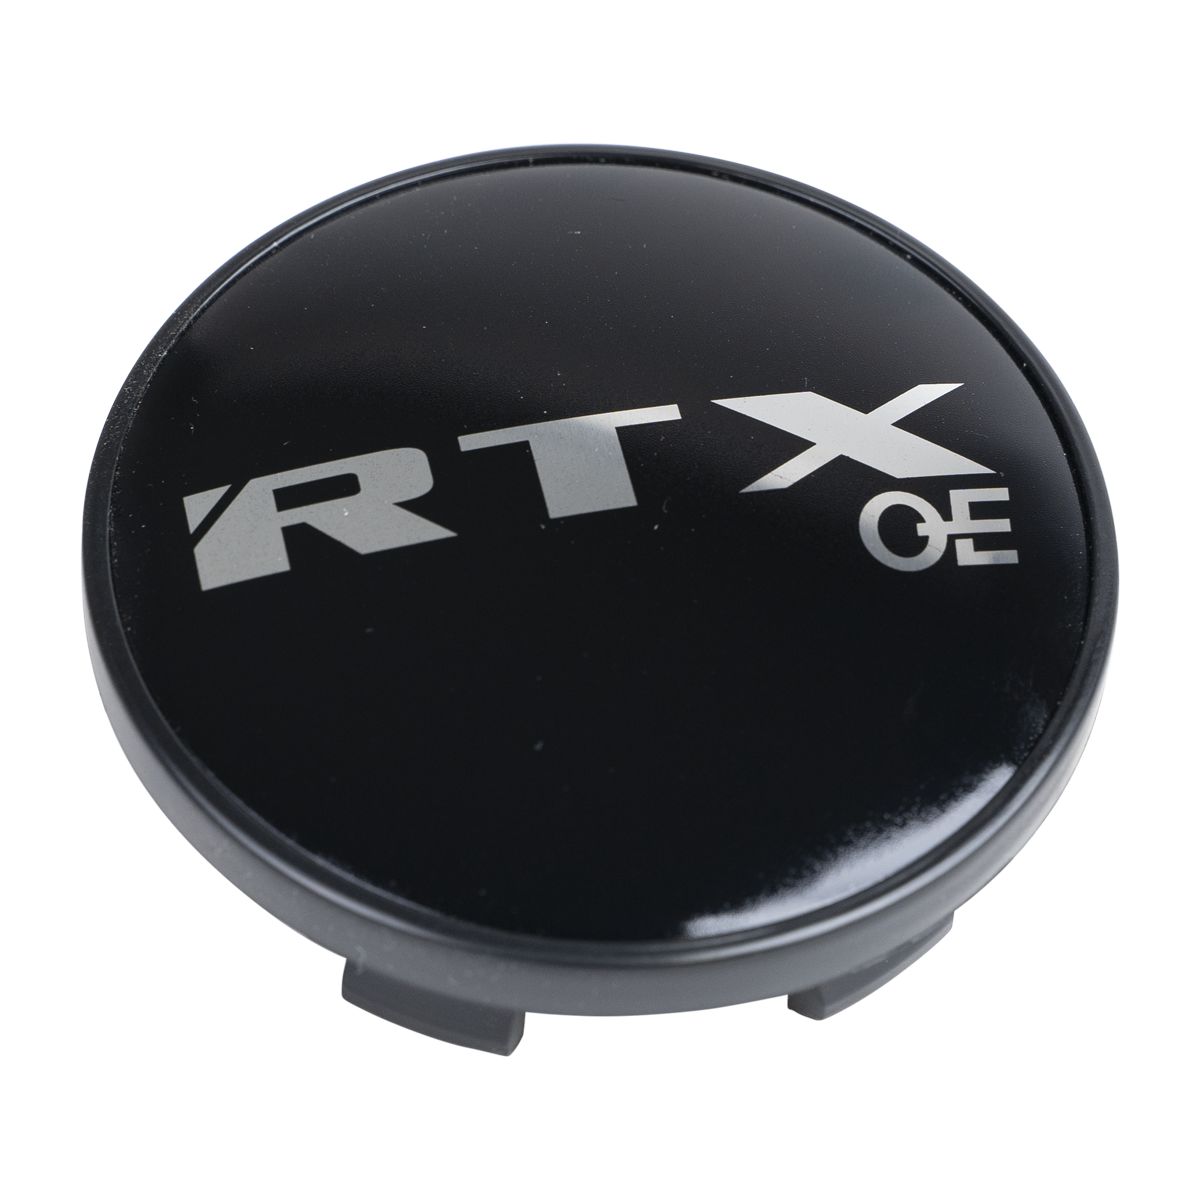 RTX 9060K56OEB - CENTER CAP SATIN BLACK w LOGO CHROME RTXoe